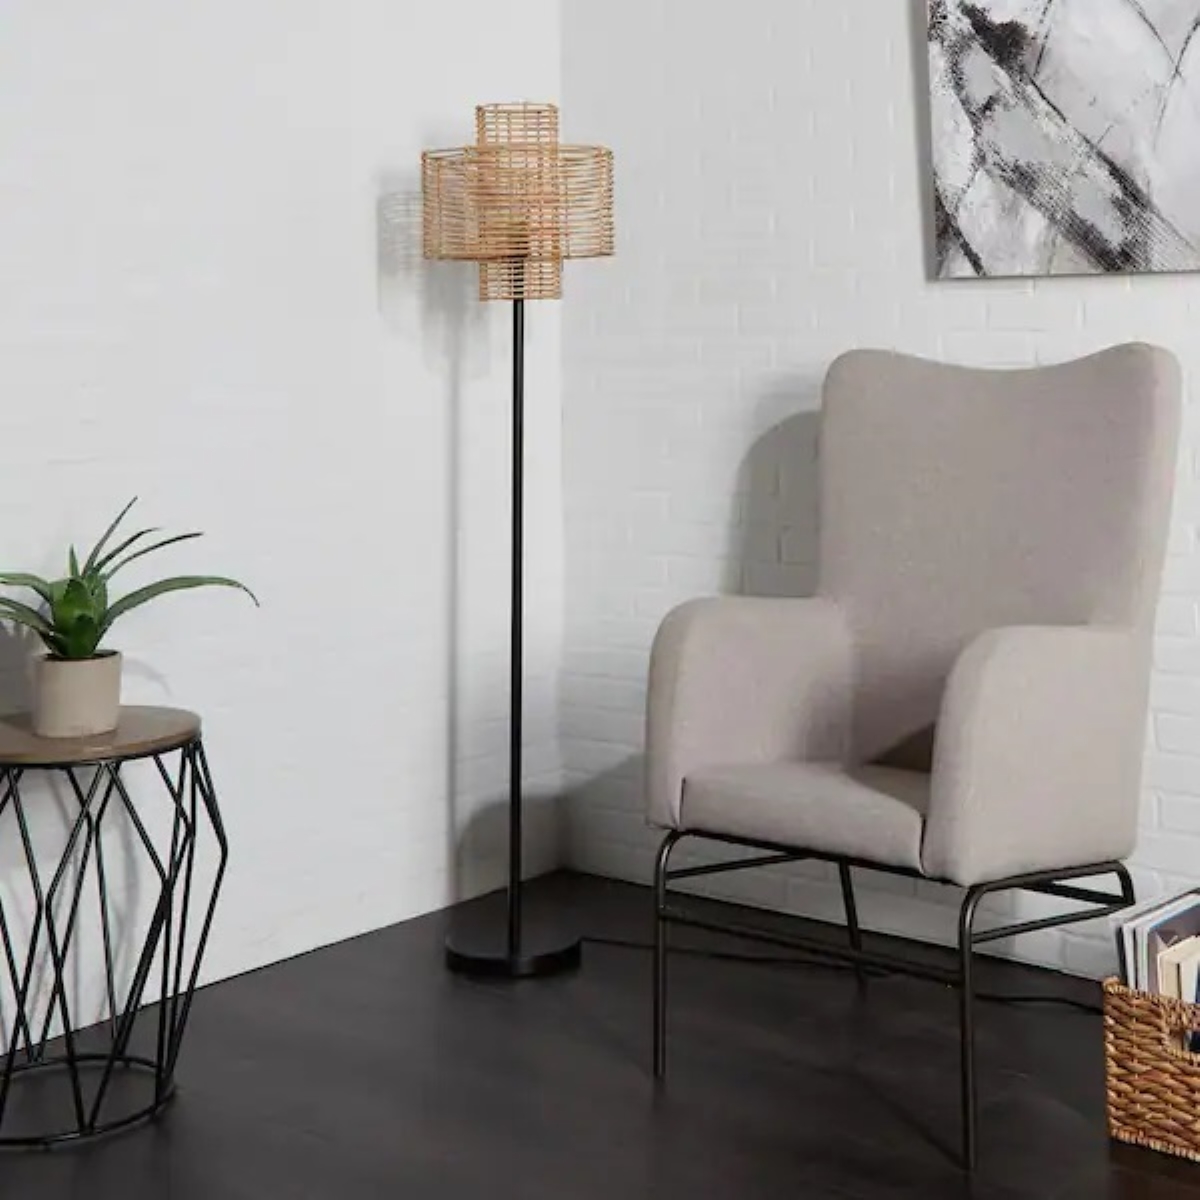 apartment decor ideas - gray chair